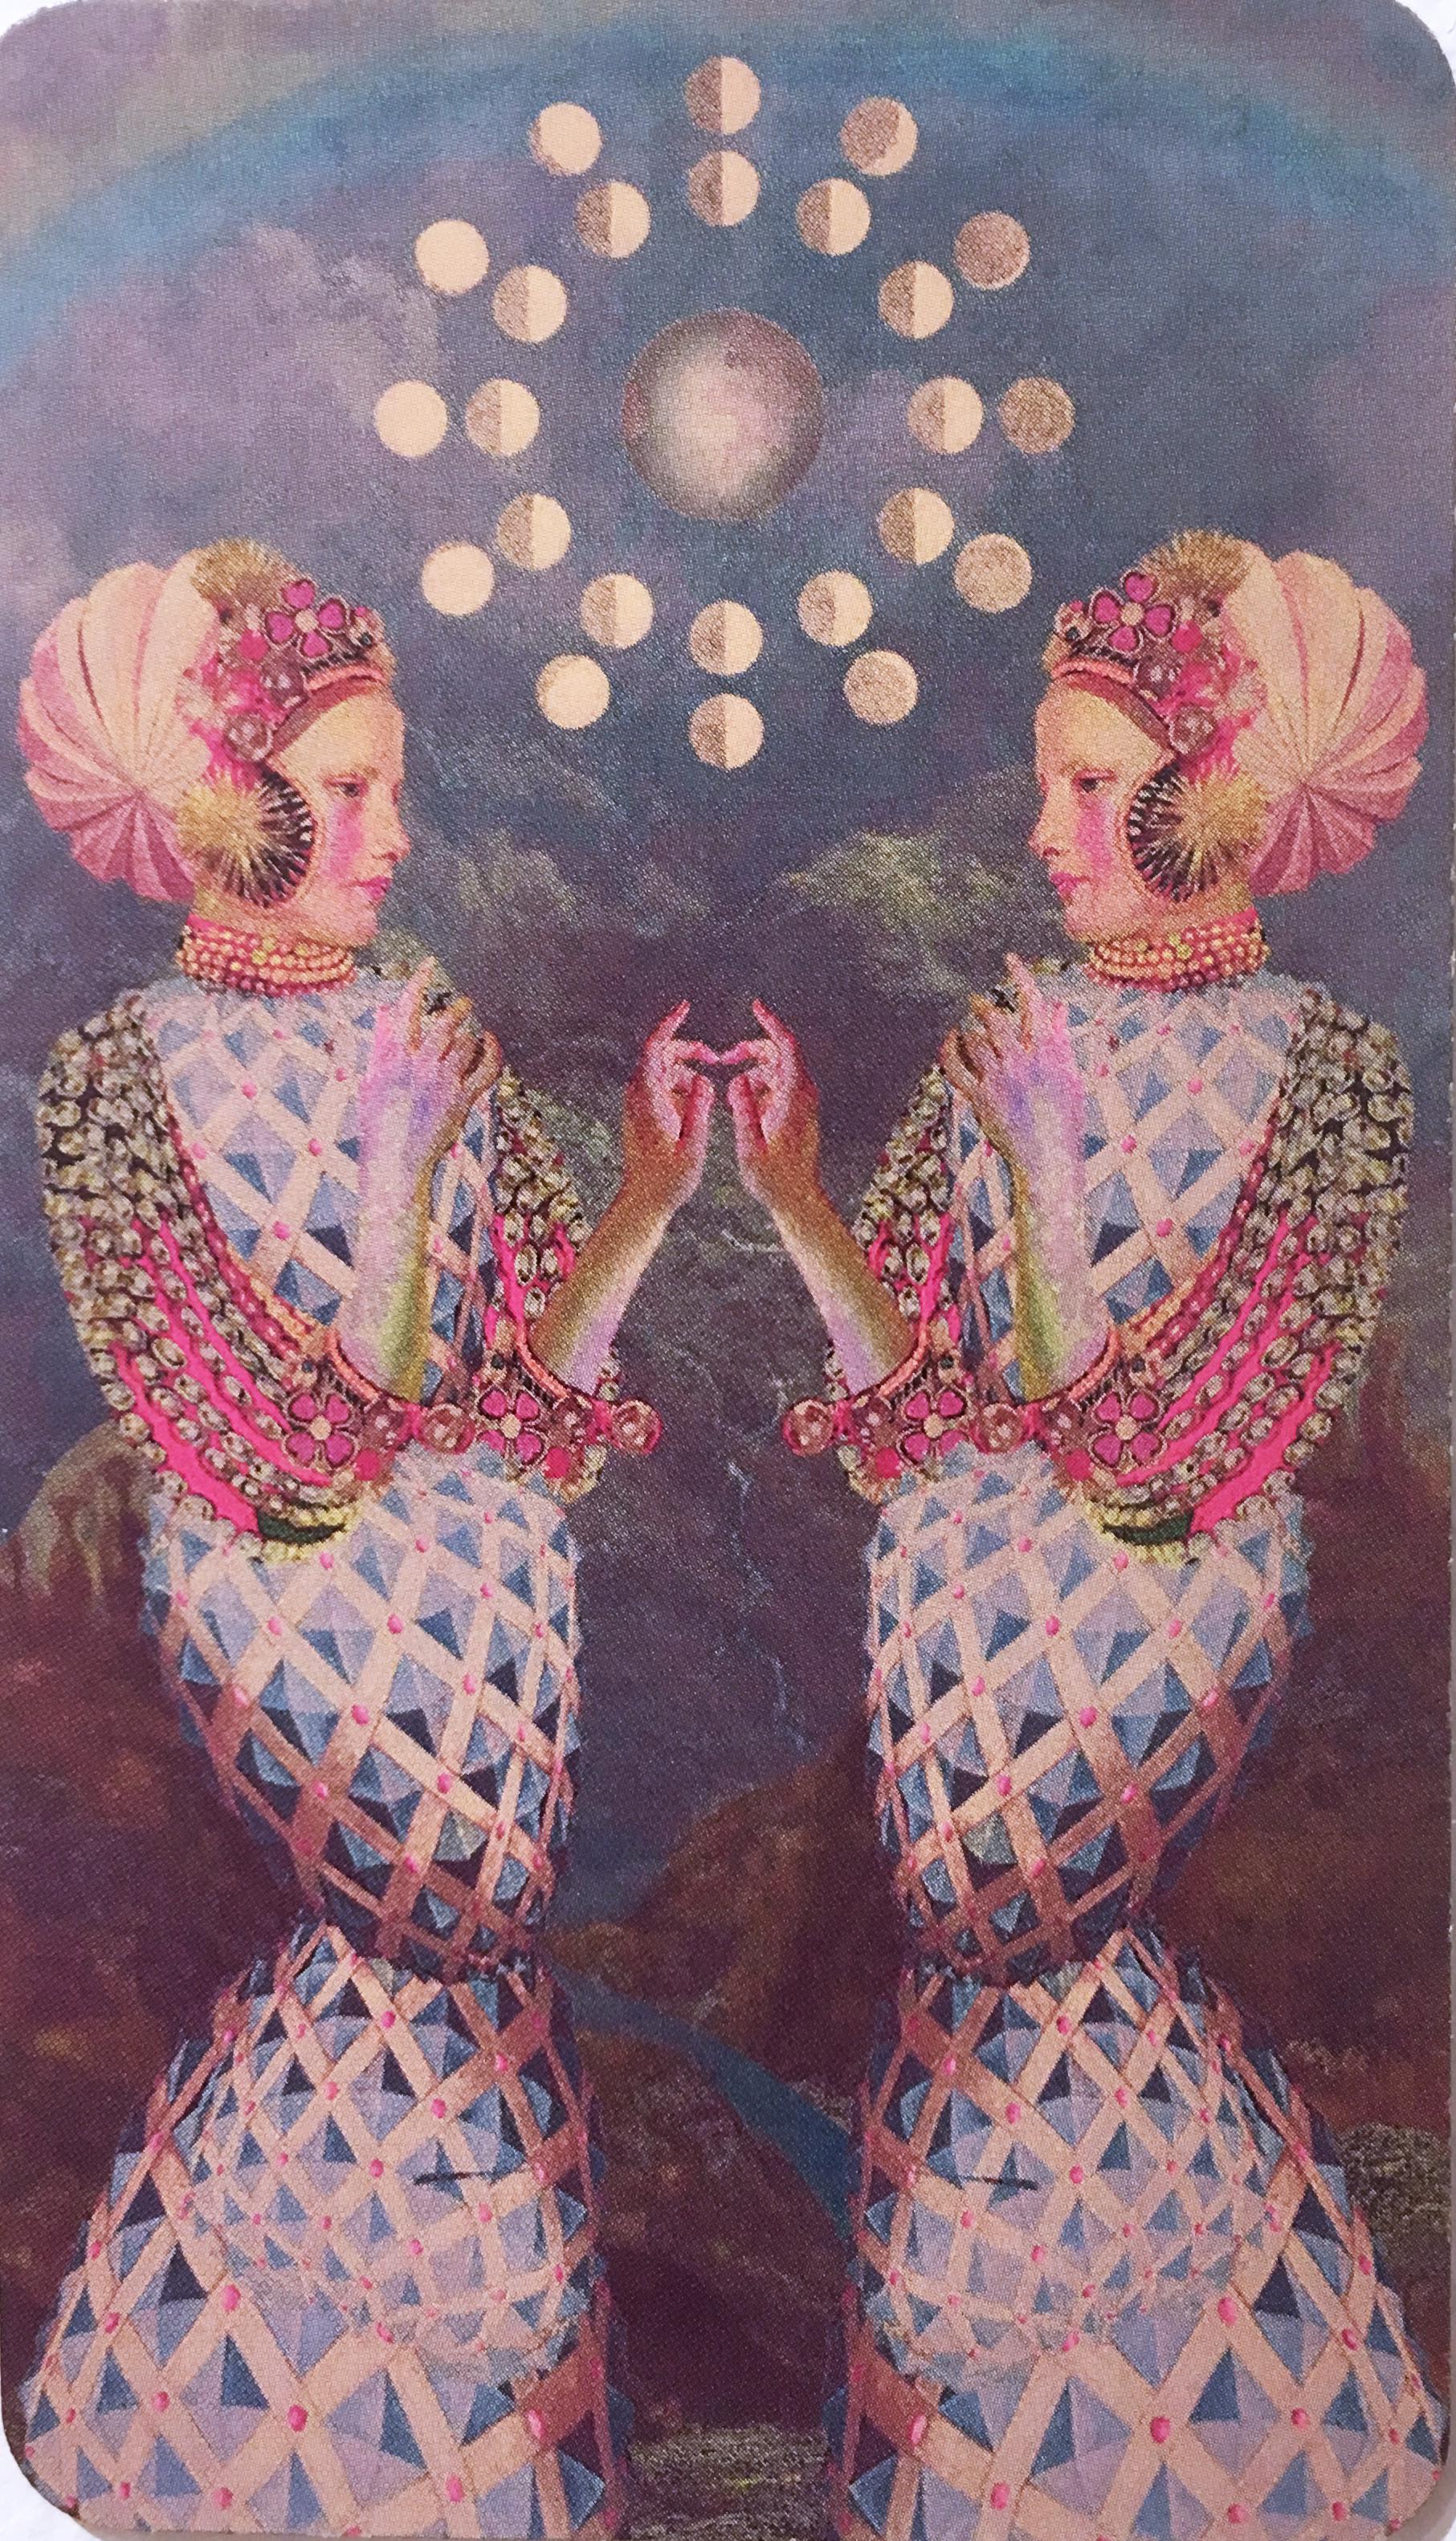 Deming King Harriman Figurative Print - Gemini, 2018, collage, print, figurative, gold, tarot, horoscope, metallic edge